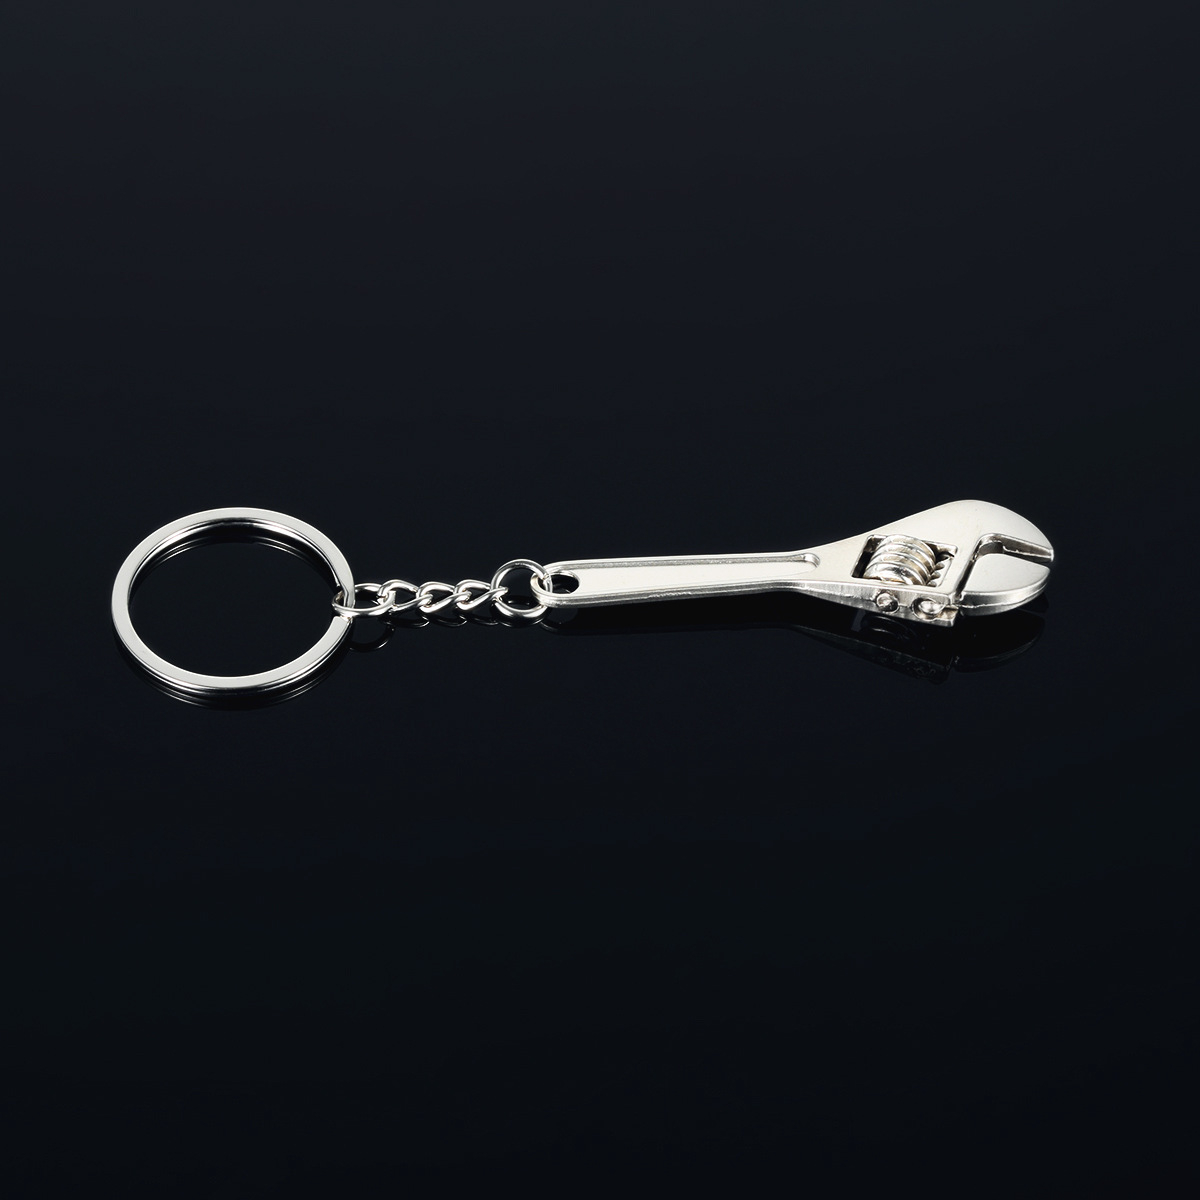 Metall Schraubenschlüssel Schlüsselanhänger Accessoire